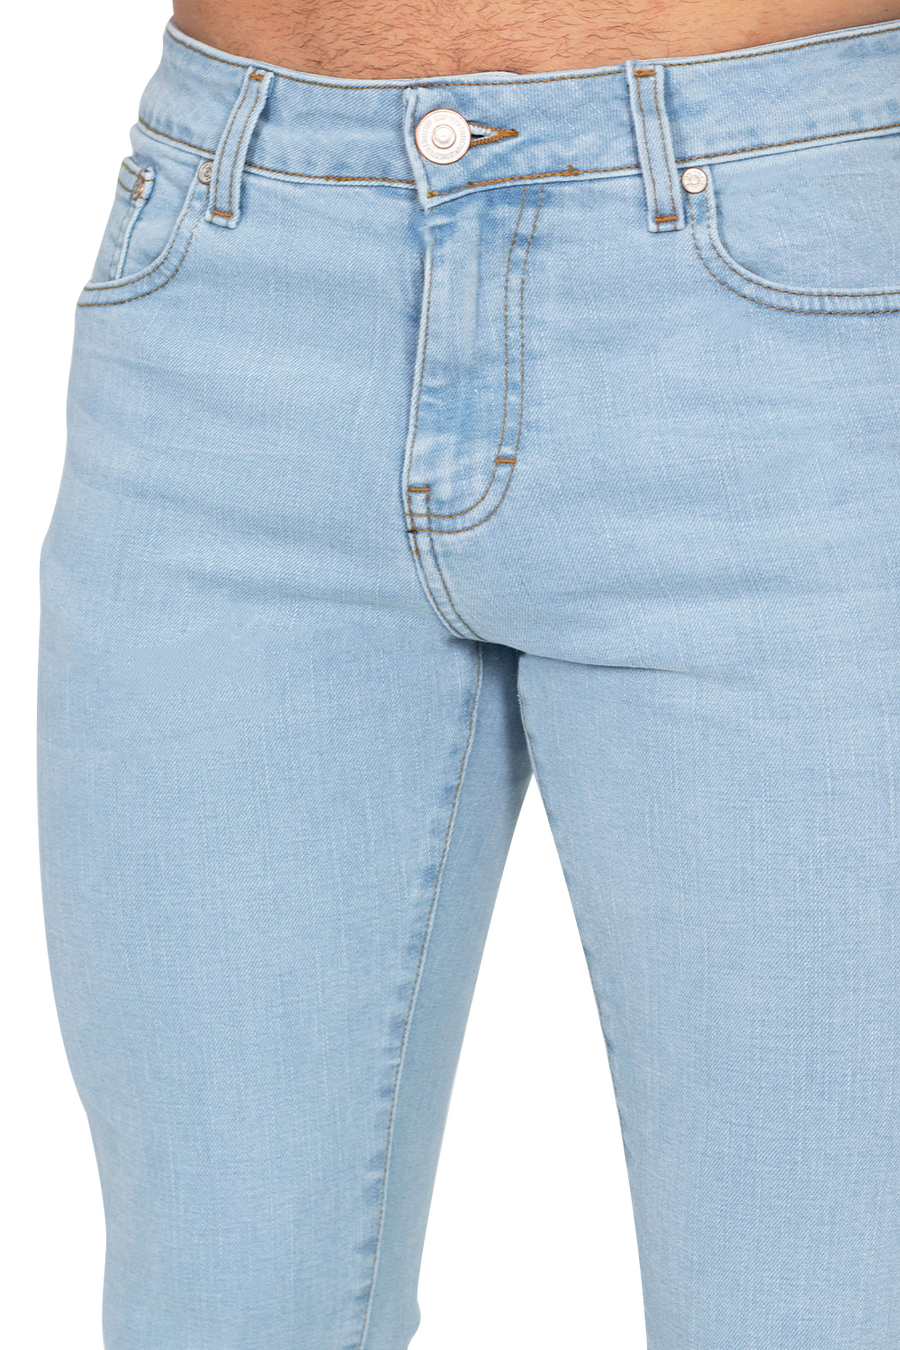 Pantalones vaqueros azul denim pantalones slim-fit ropa, pantalones para  mujer, pantalones, azul, mezclilla png